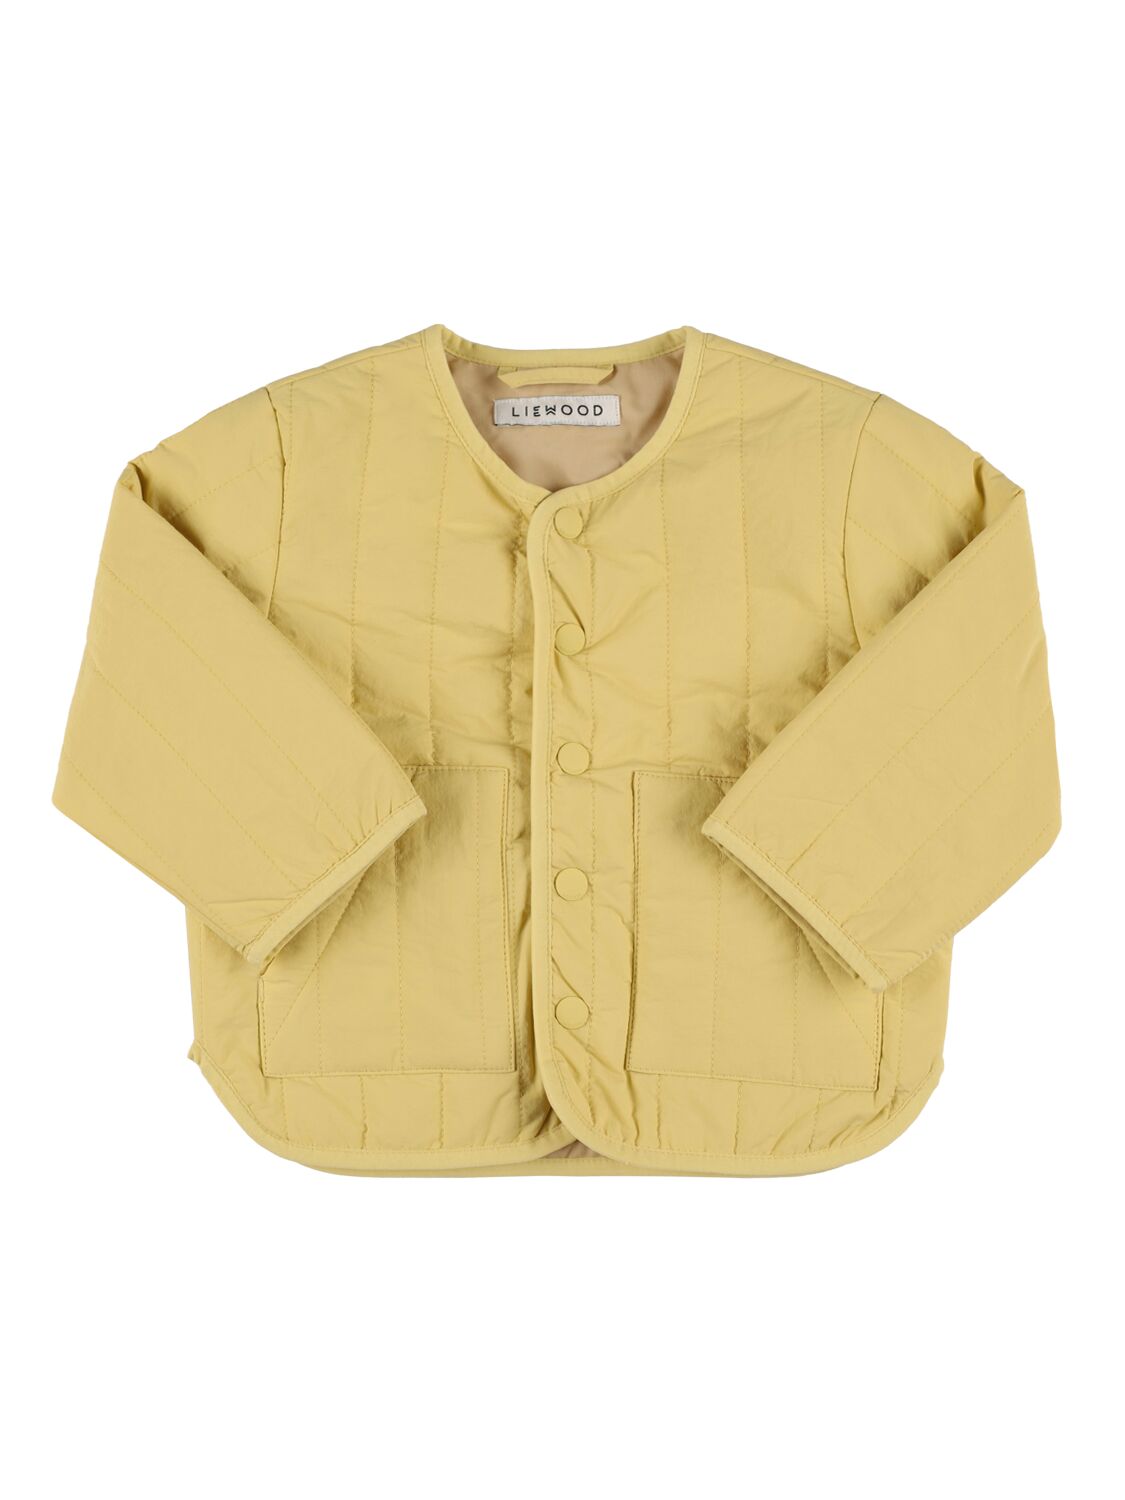 Liewood Kids' Cotton Jacket In Yellow